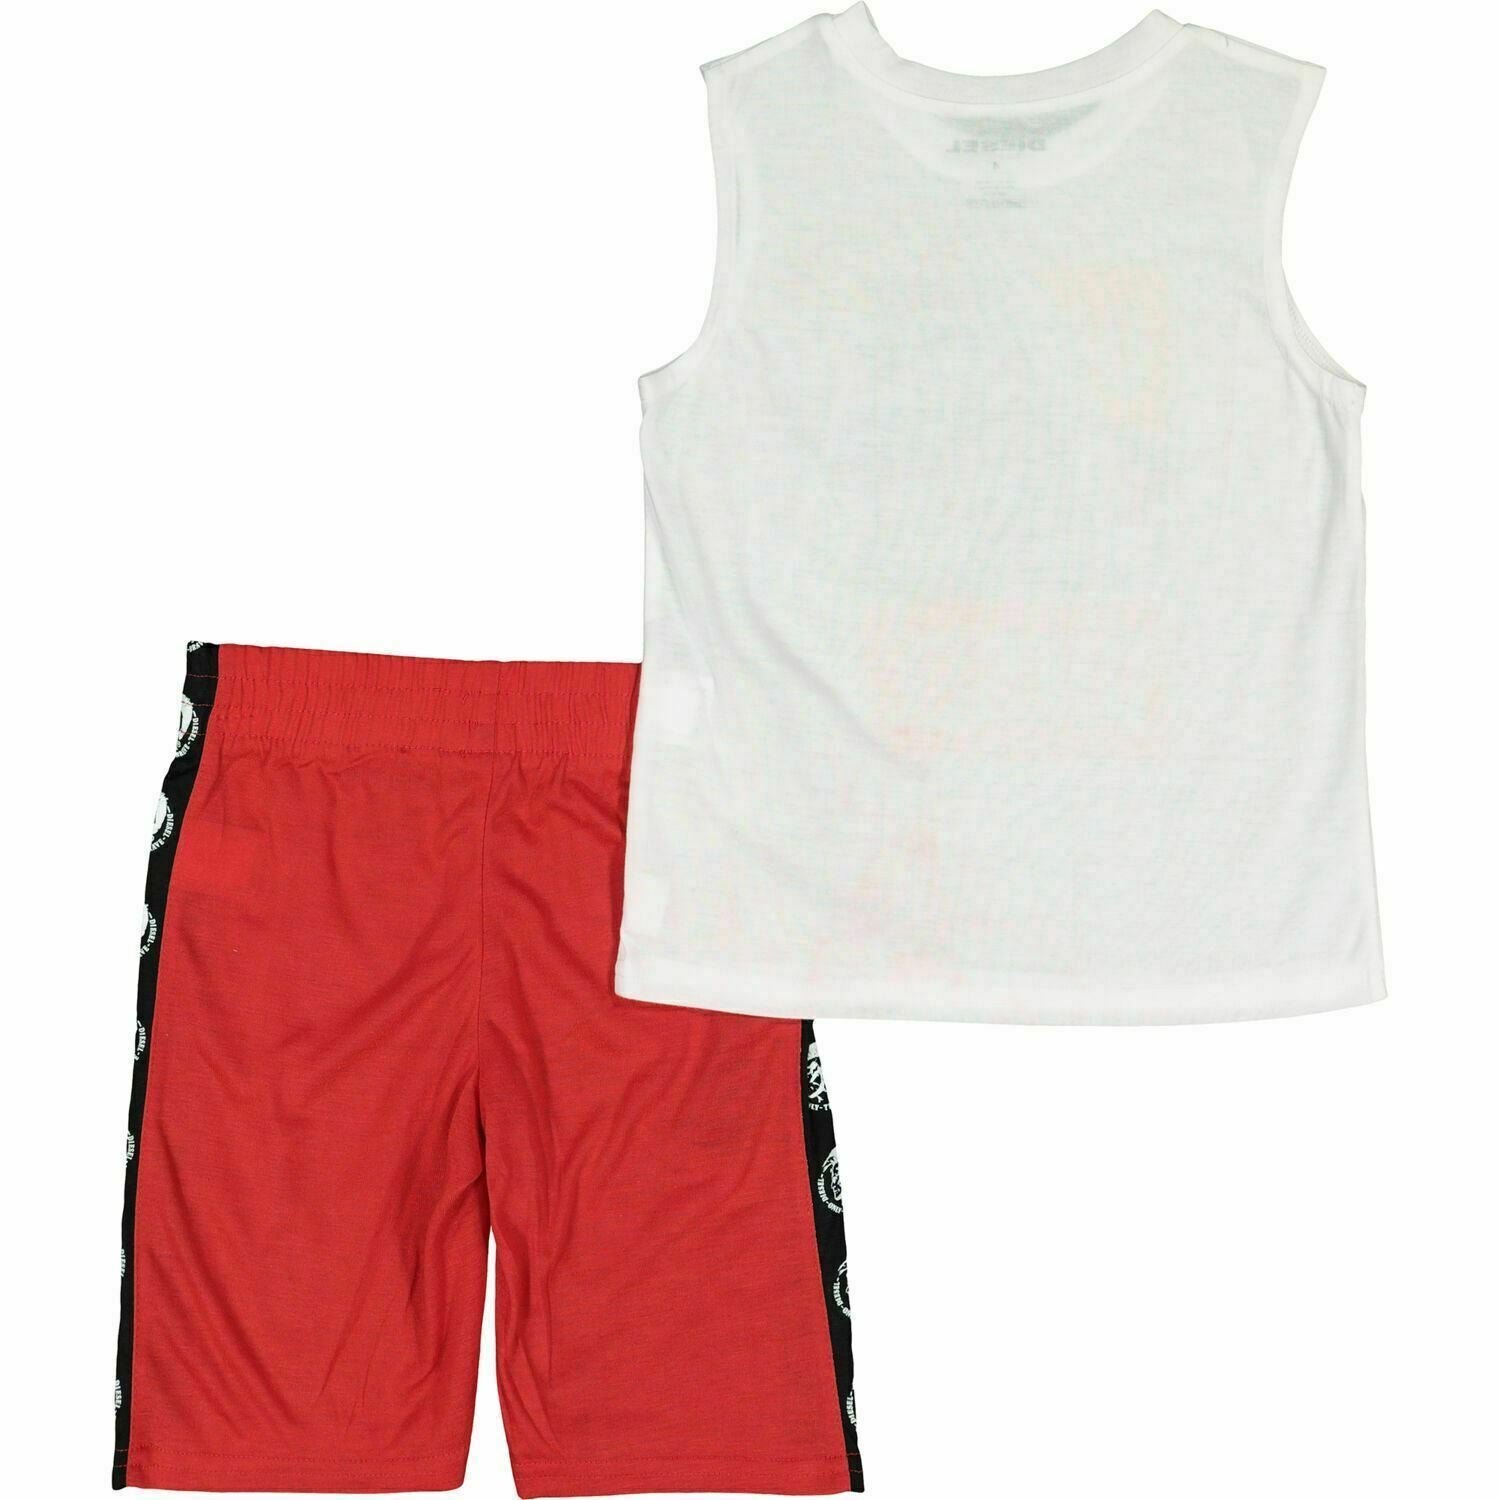 DIESEL Boys Kids 2-pc Pyjama Set Vest Tank Top & Shorts White & Red size 6 years